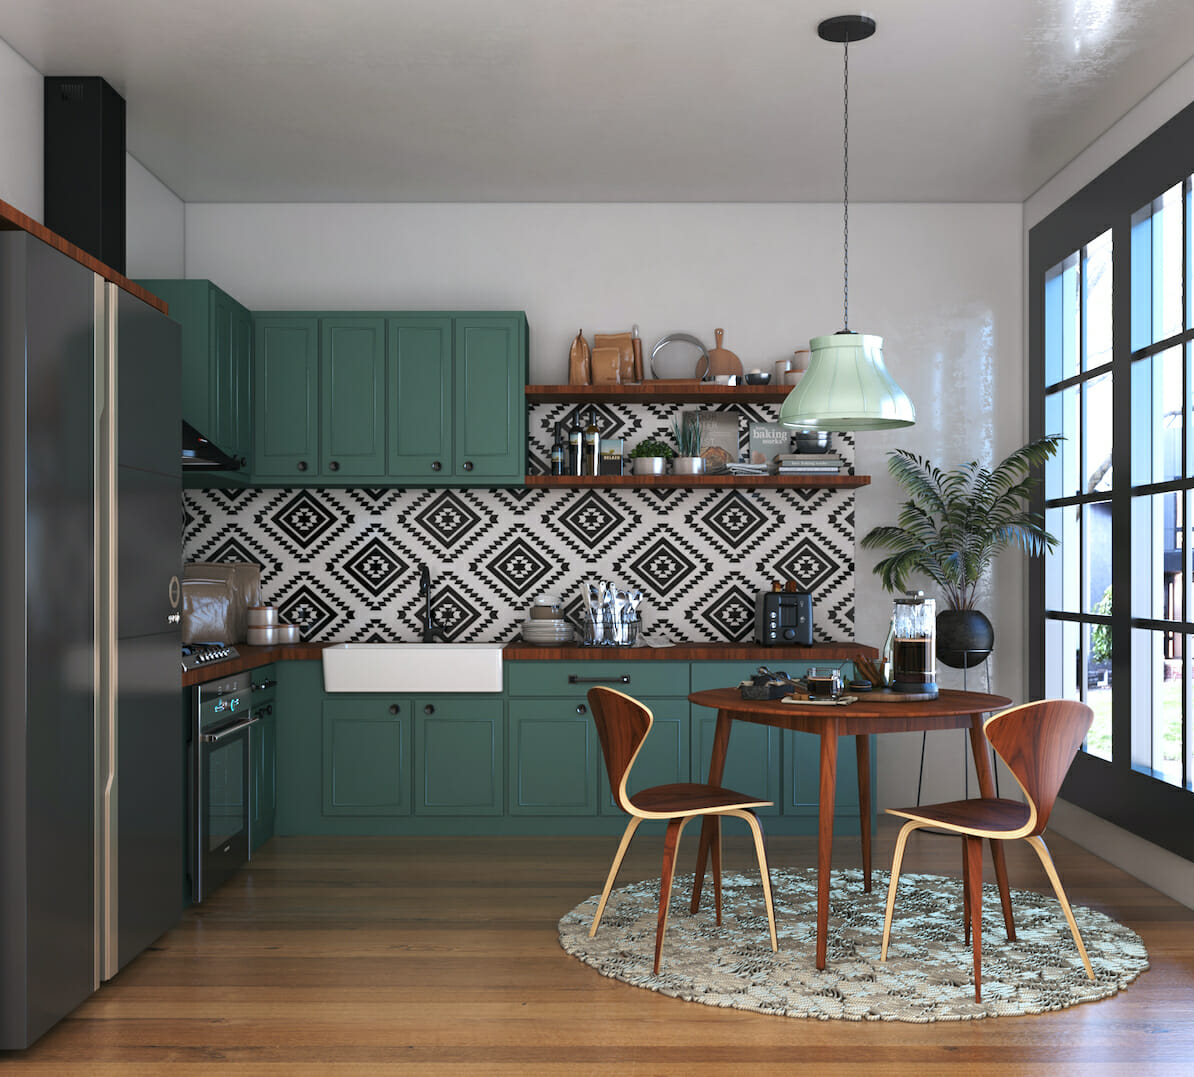 Kitchen design ideas - statement tile backsplash